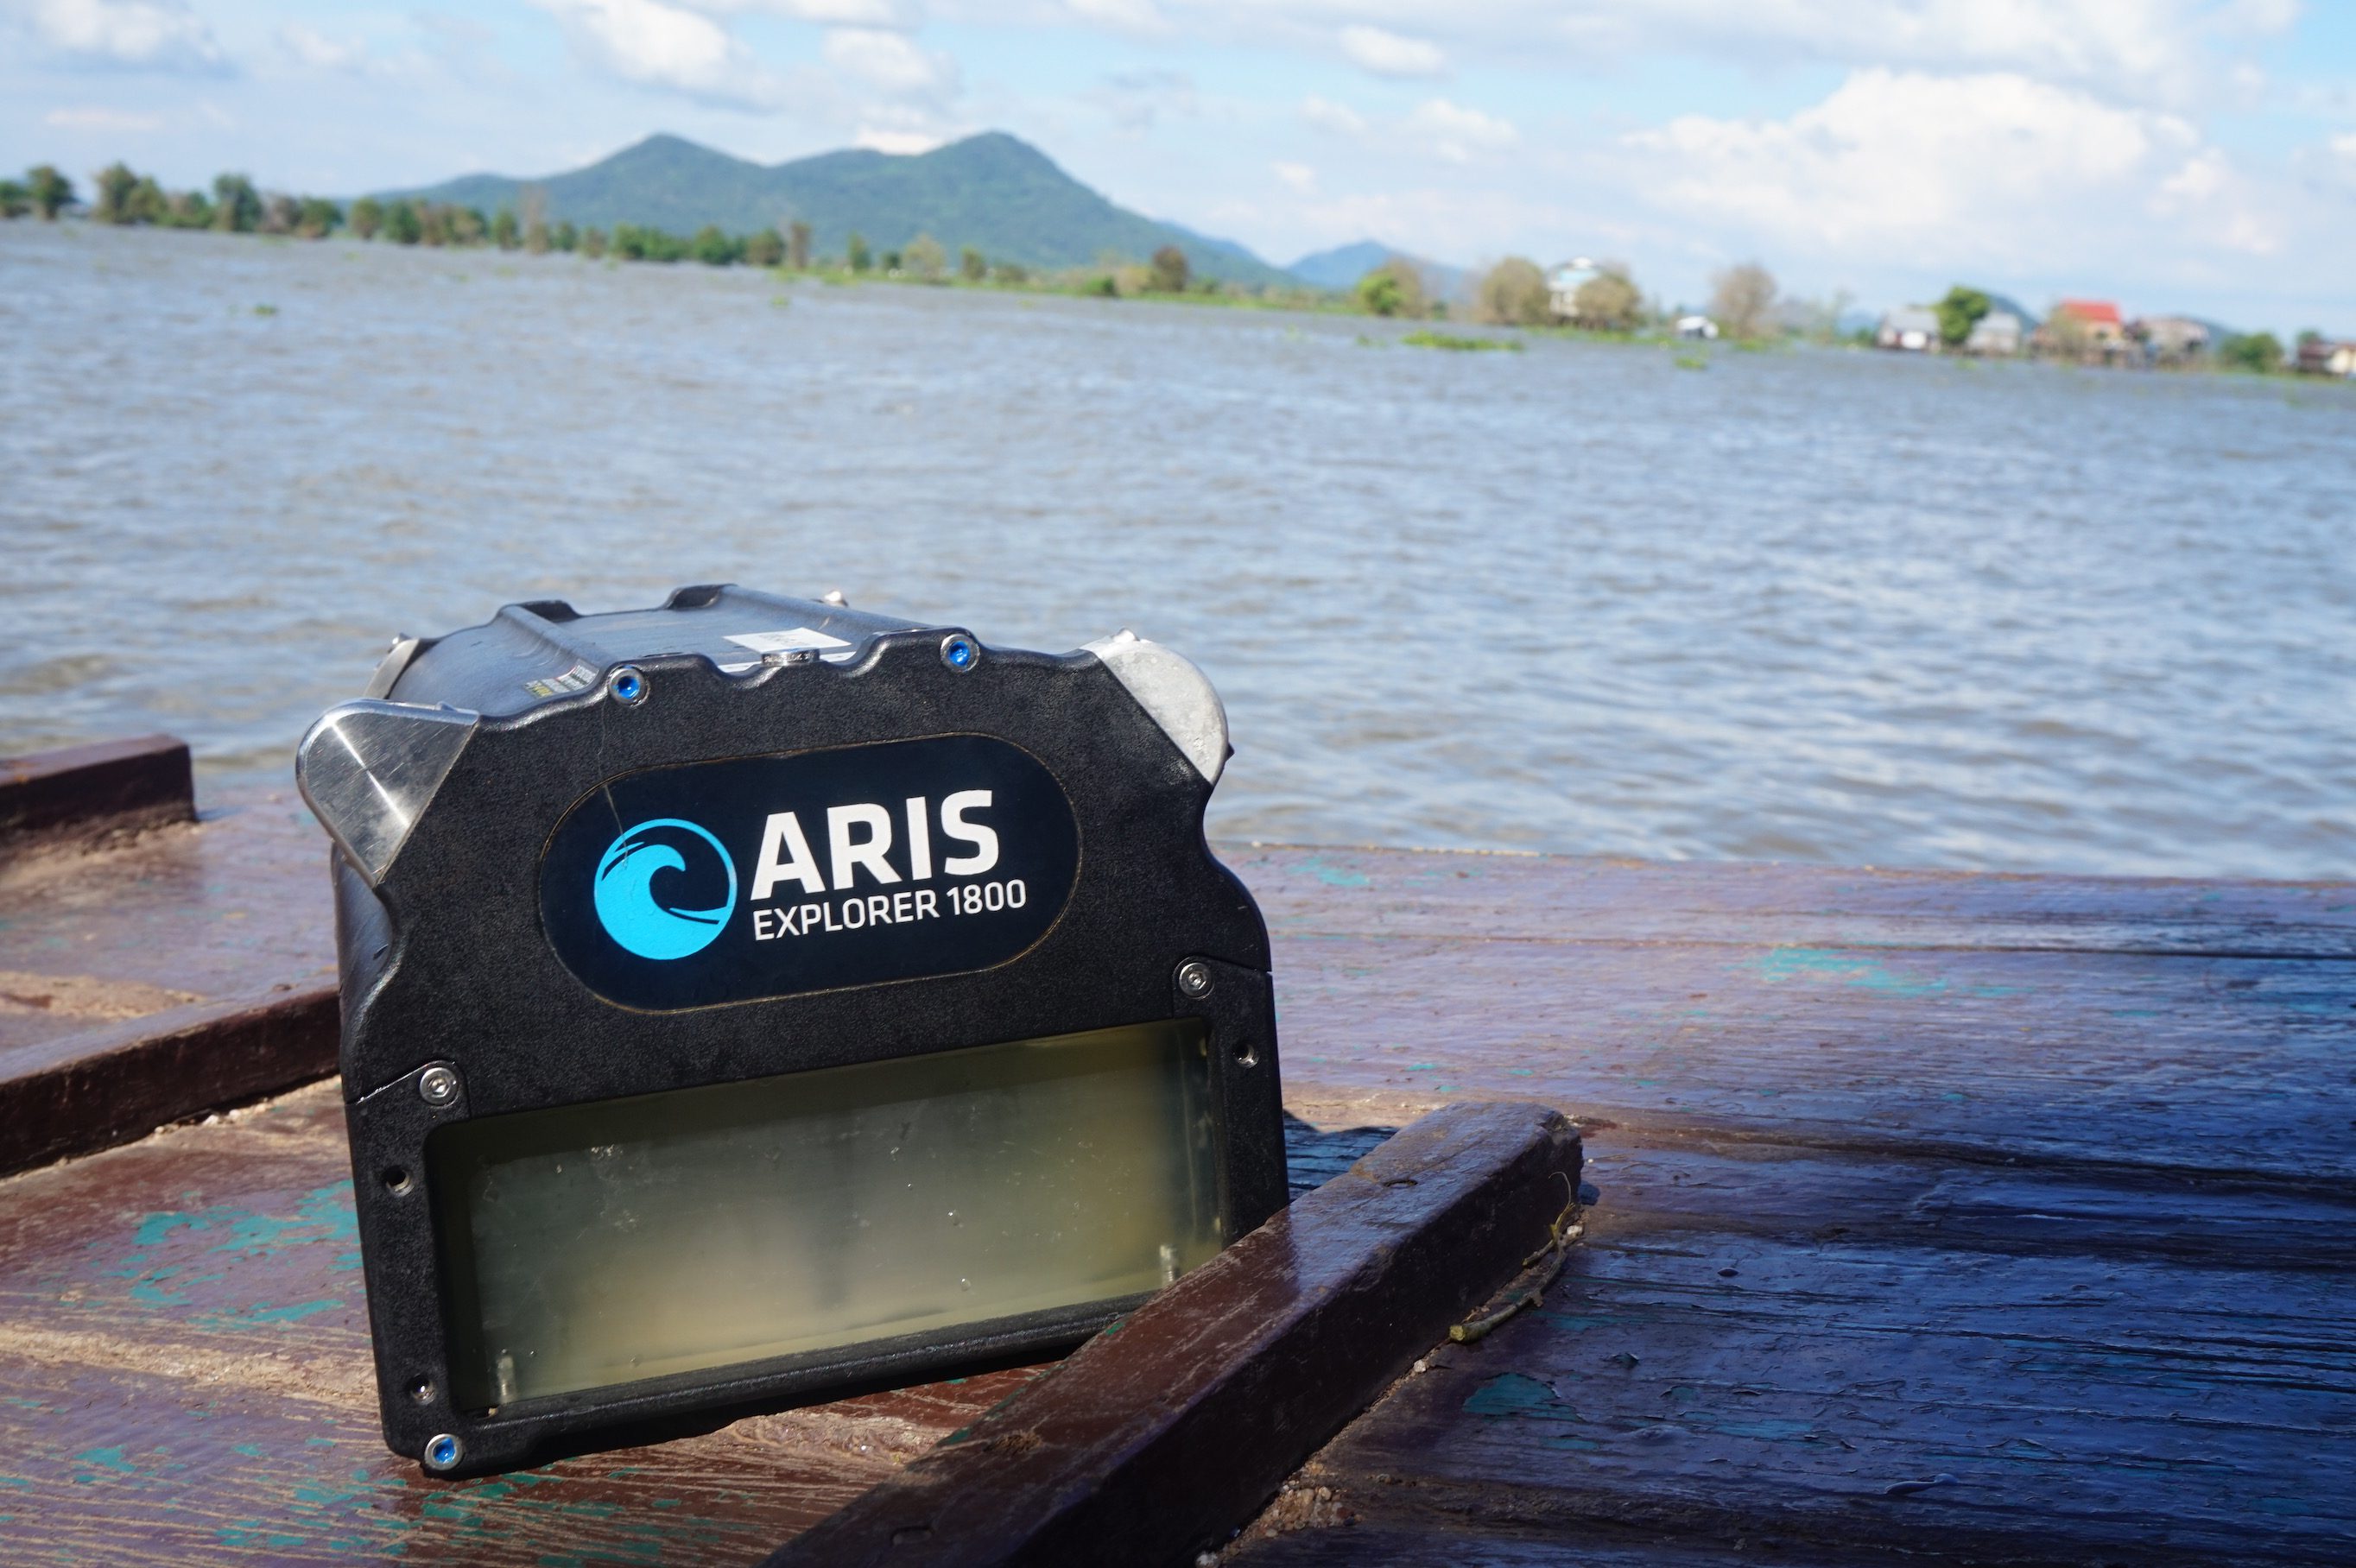 The ARIS camera at the Tonle Sap River